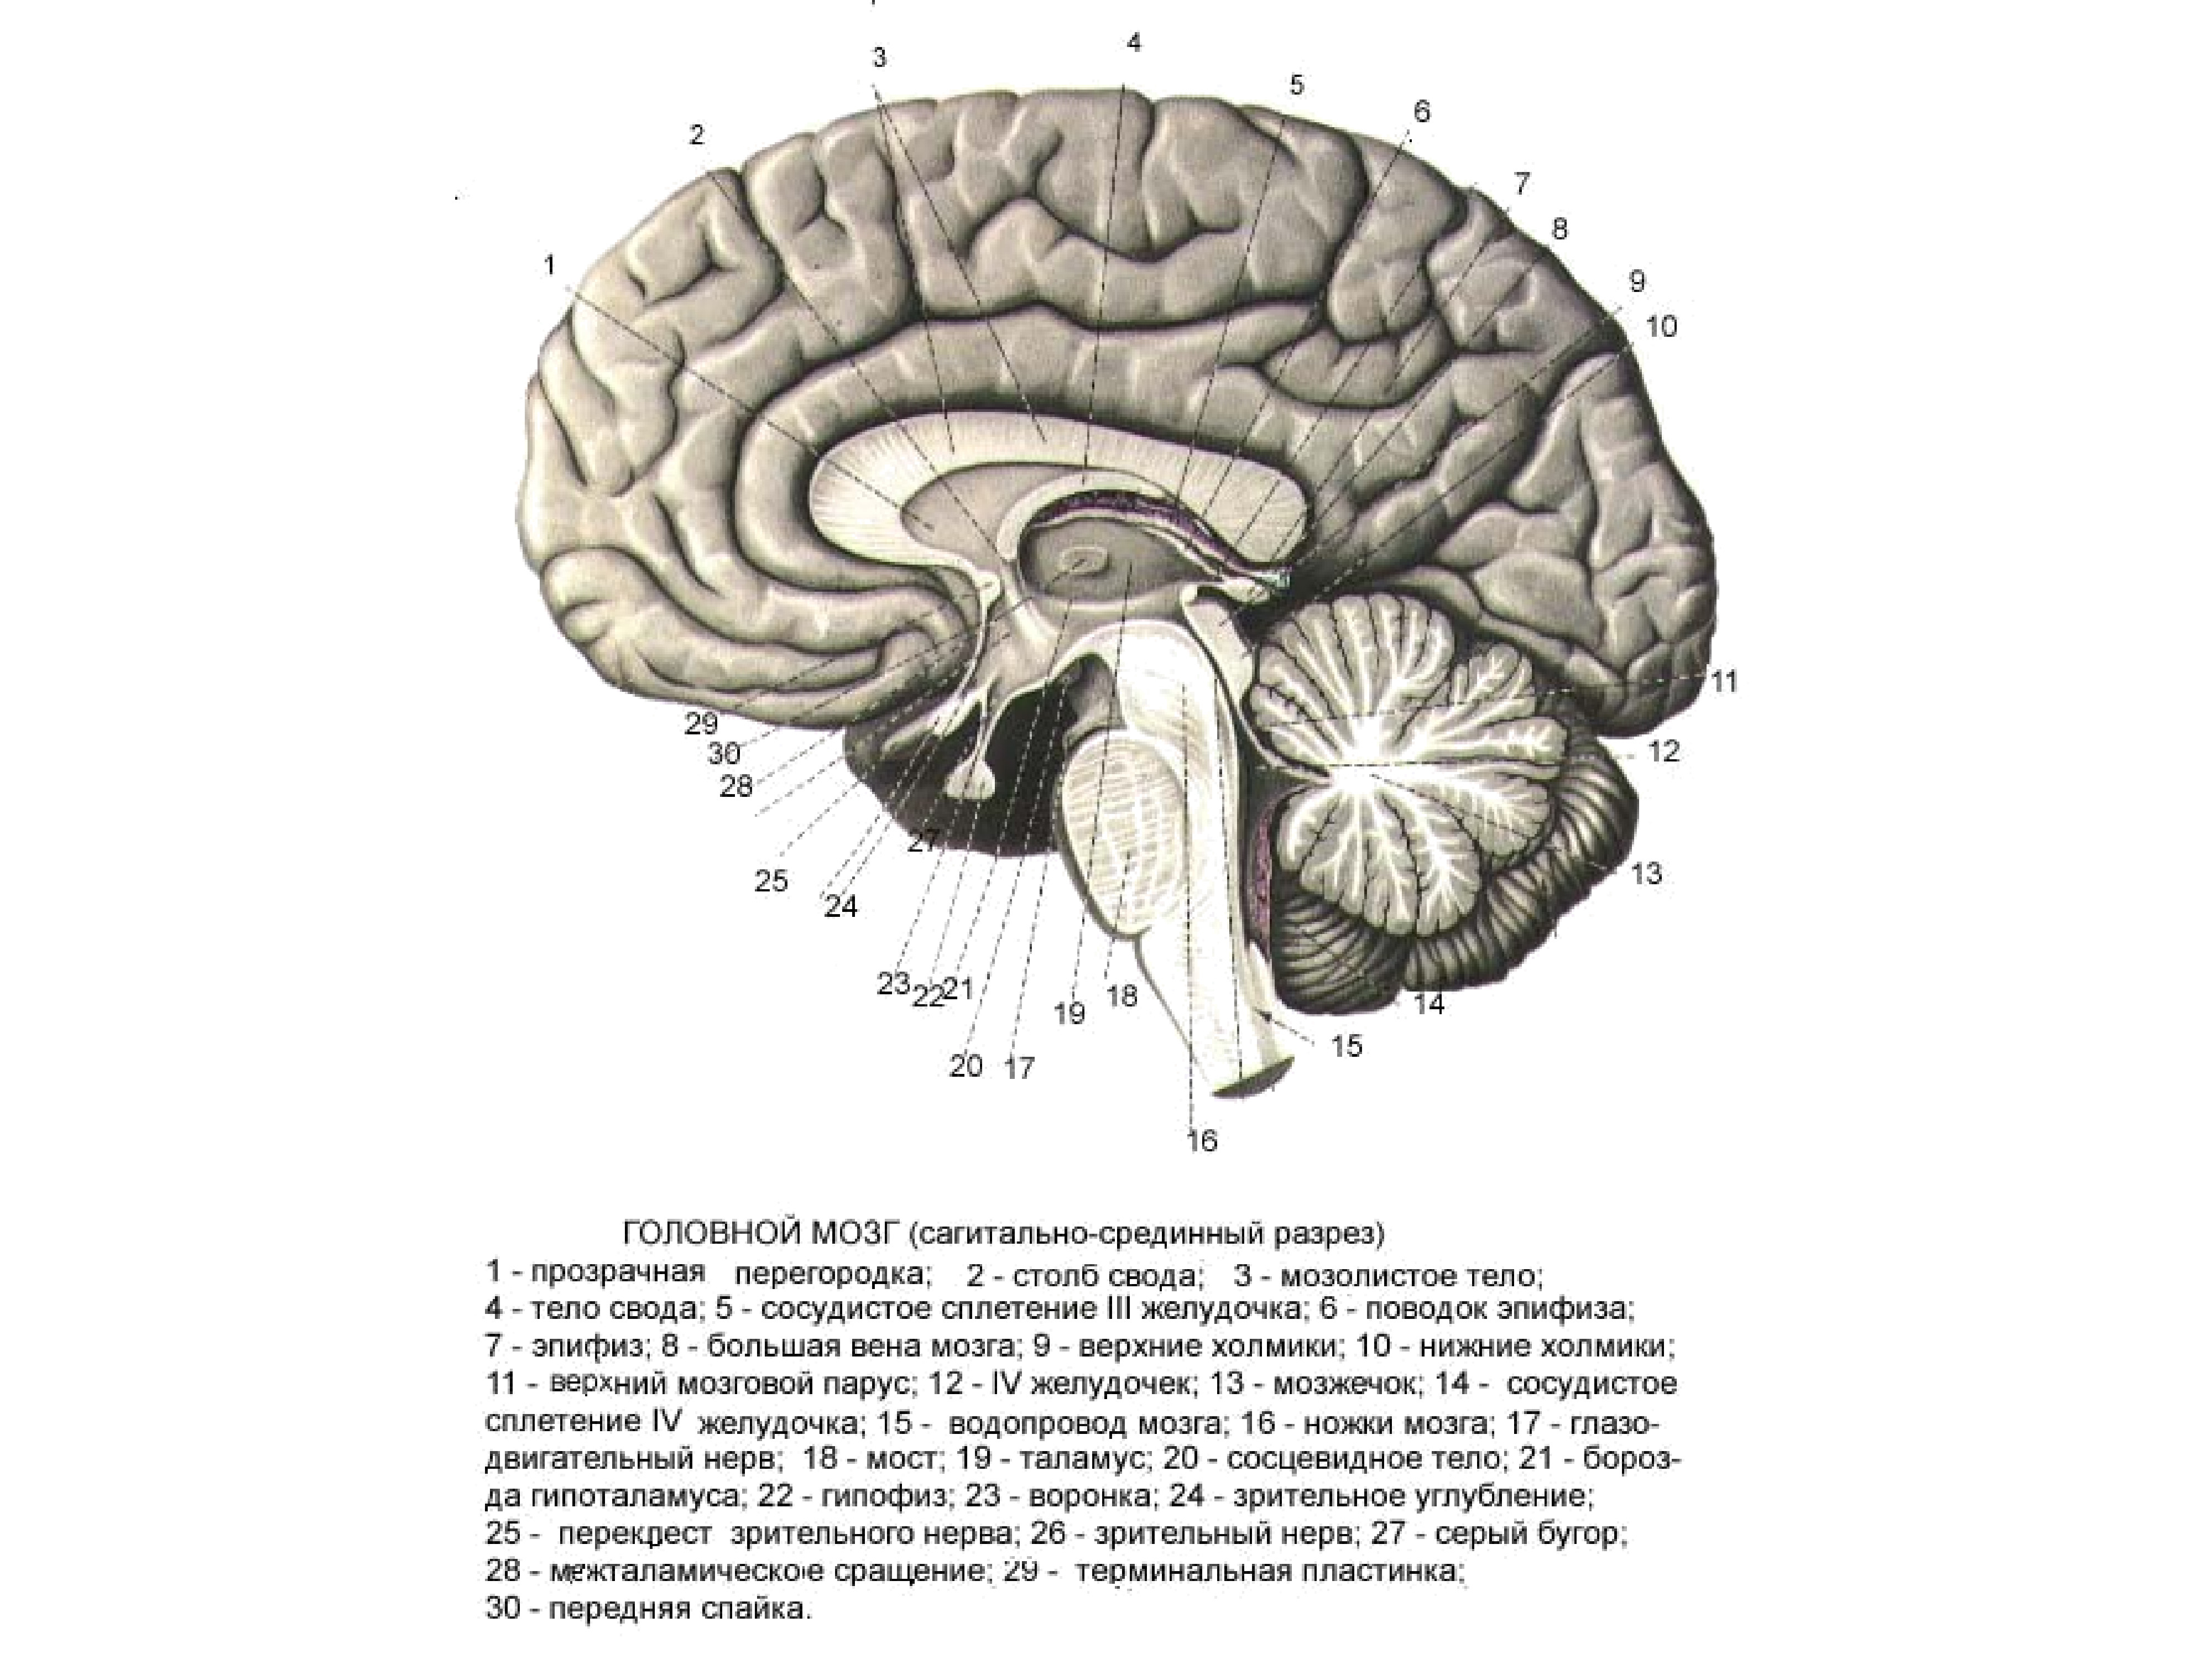 Характеристика слова спайка. Мозолистое тело свод передняя спайка анатомия. Мозолистое тело Сагиттальный разрез. Срединный срез головного мозга. Промежуточный мозг Сагиттальный разрез головного мозга.